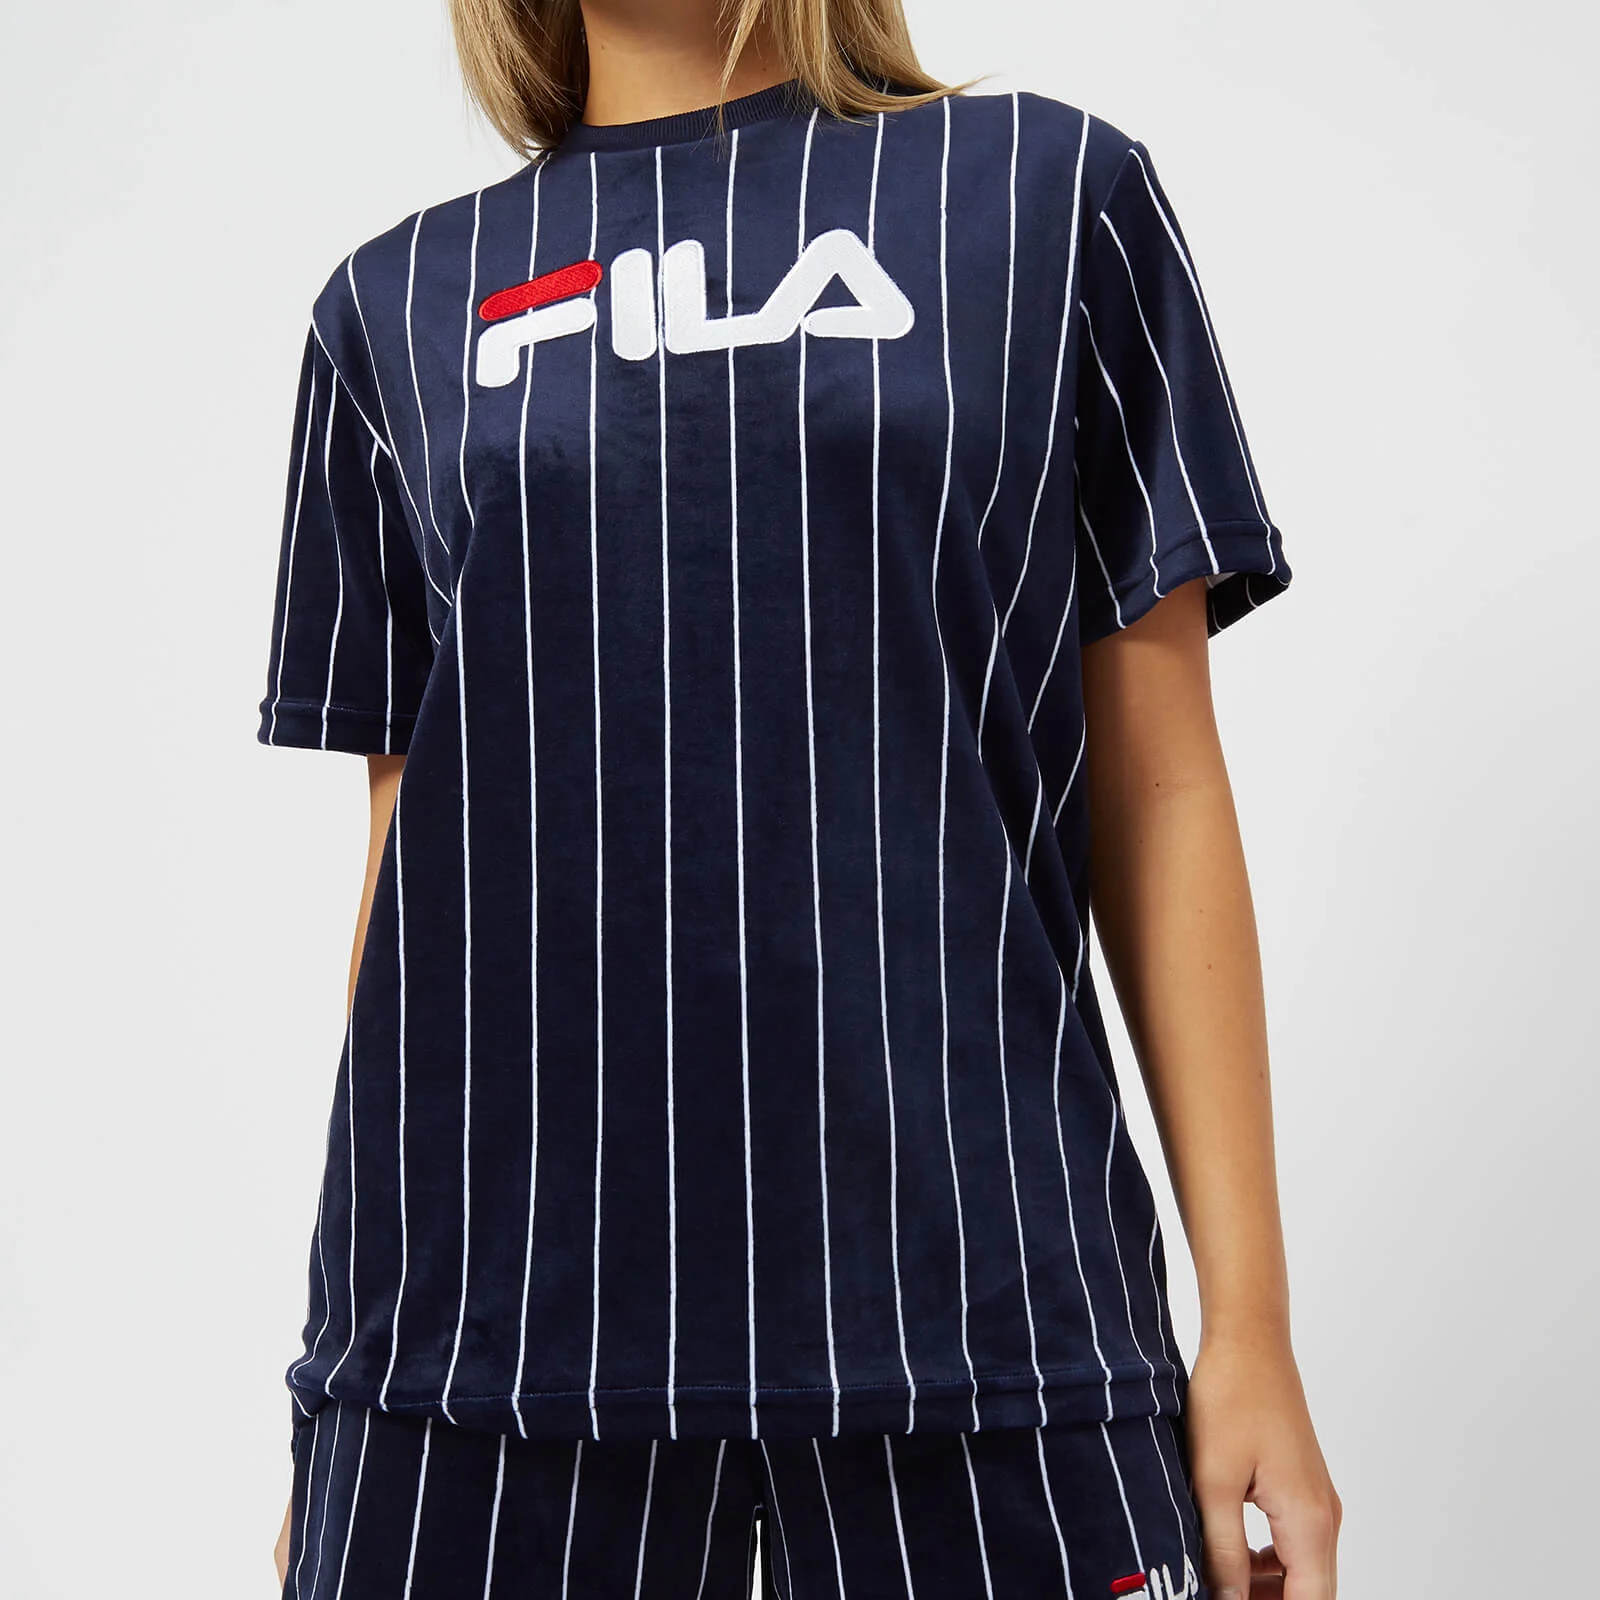 FILA Women's Stretch Velour Pinstripe T-Shirt - Navy/White Image 1